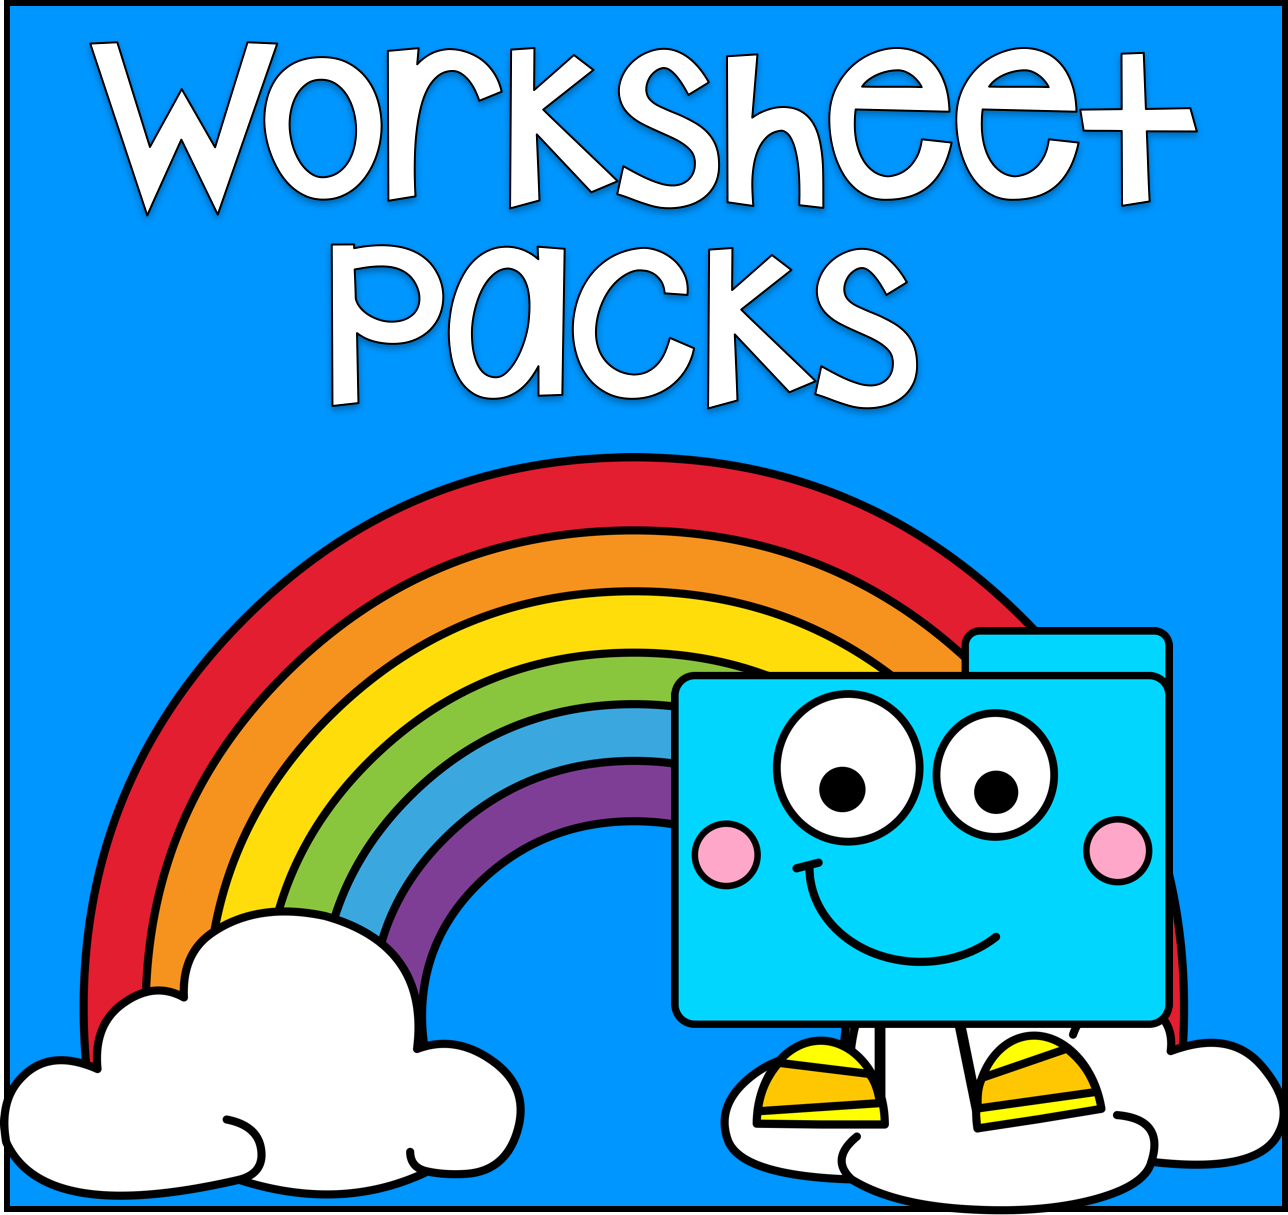 Worksheet Packs